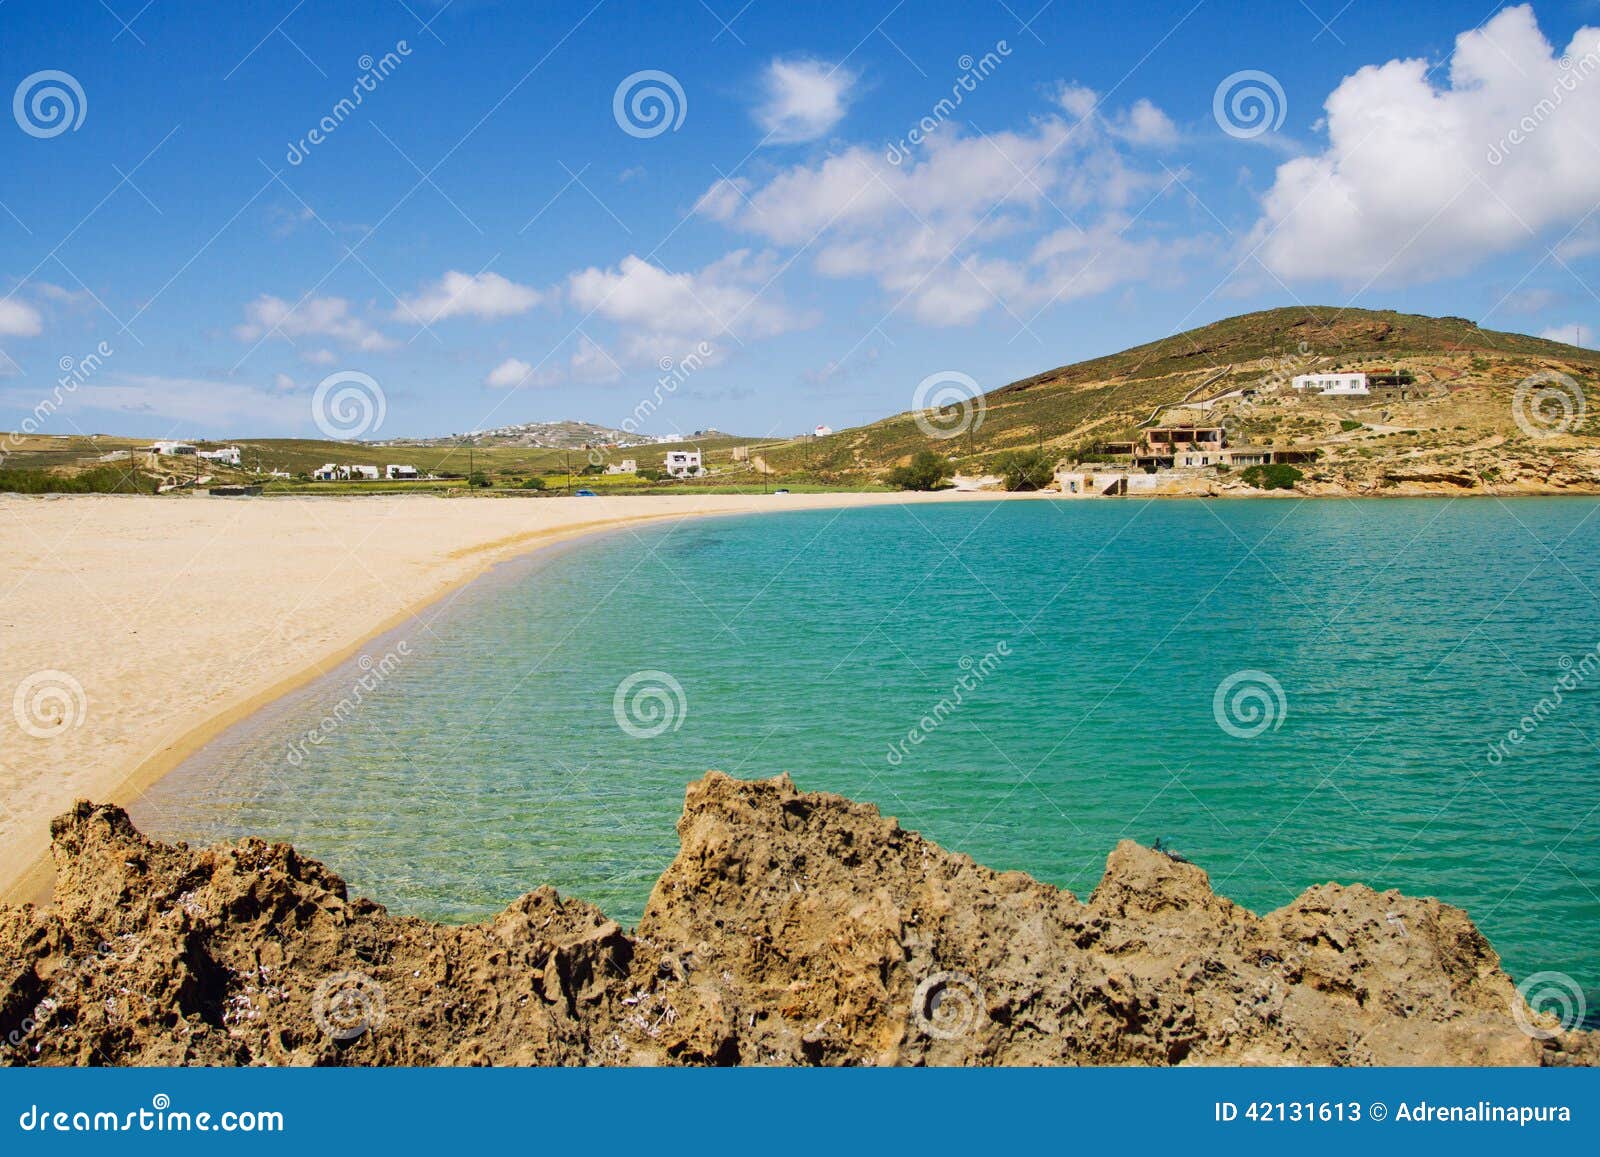 Mykonos beach stock image. Image of sand, greece, travel ...